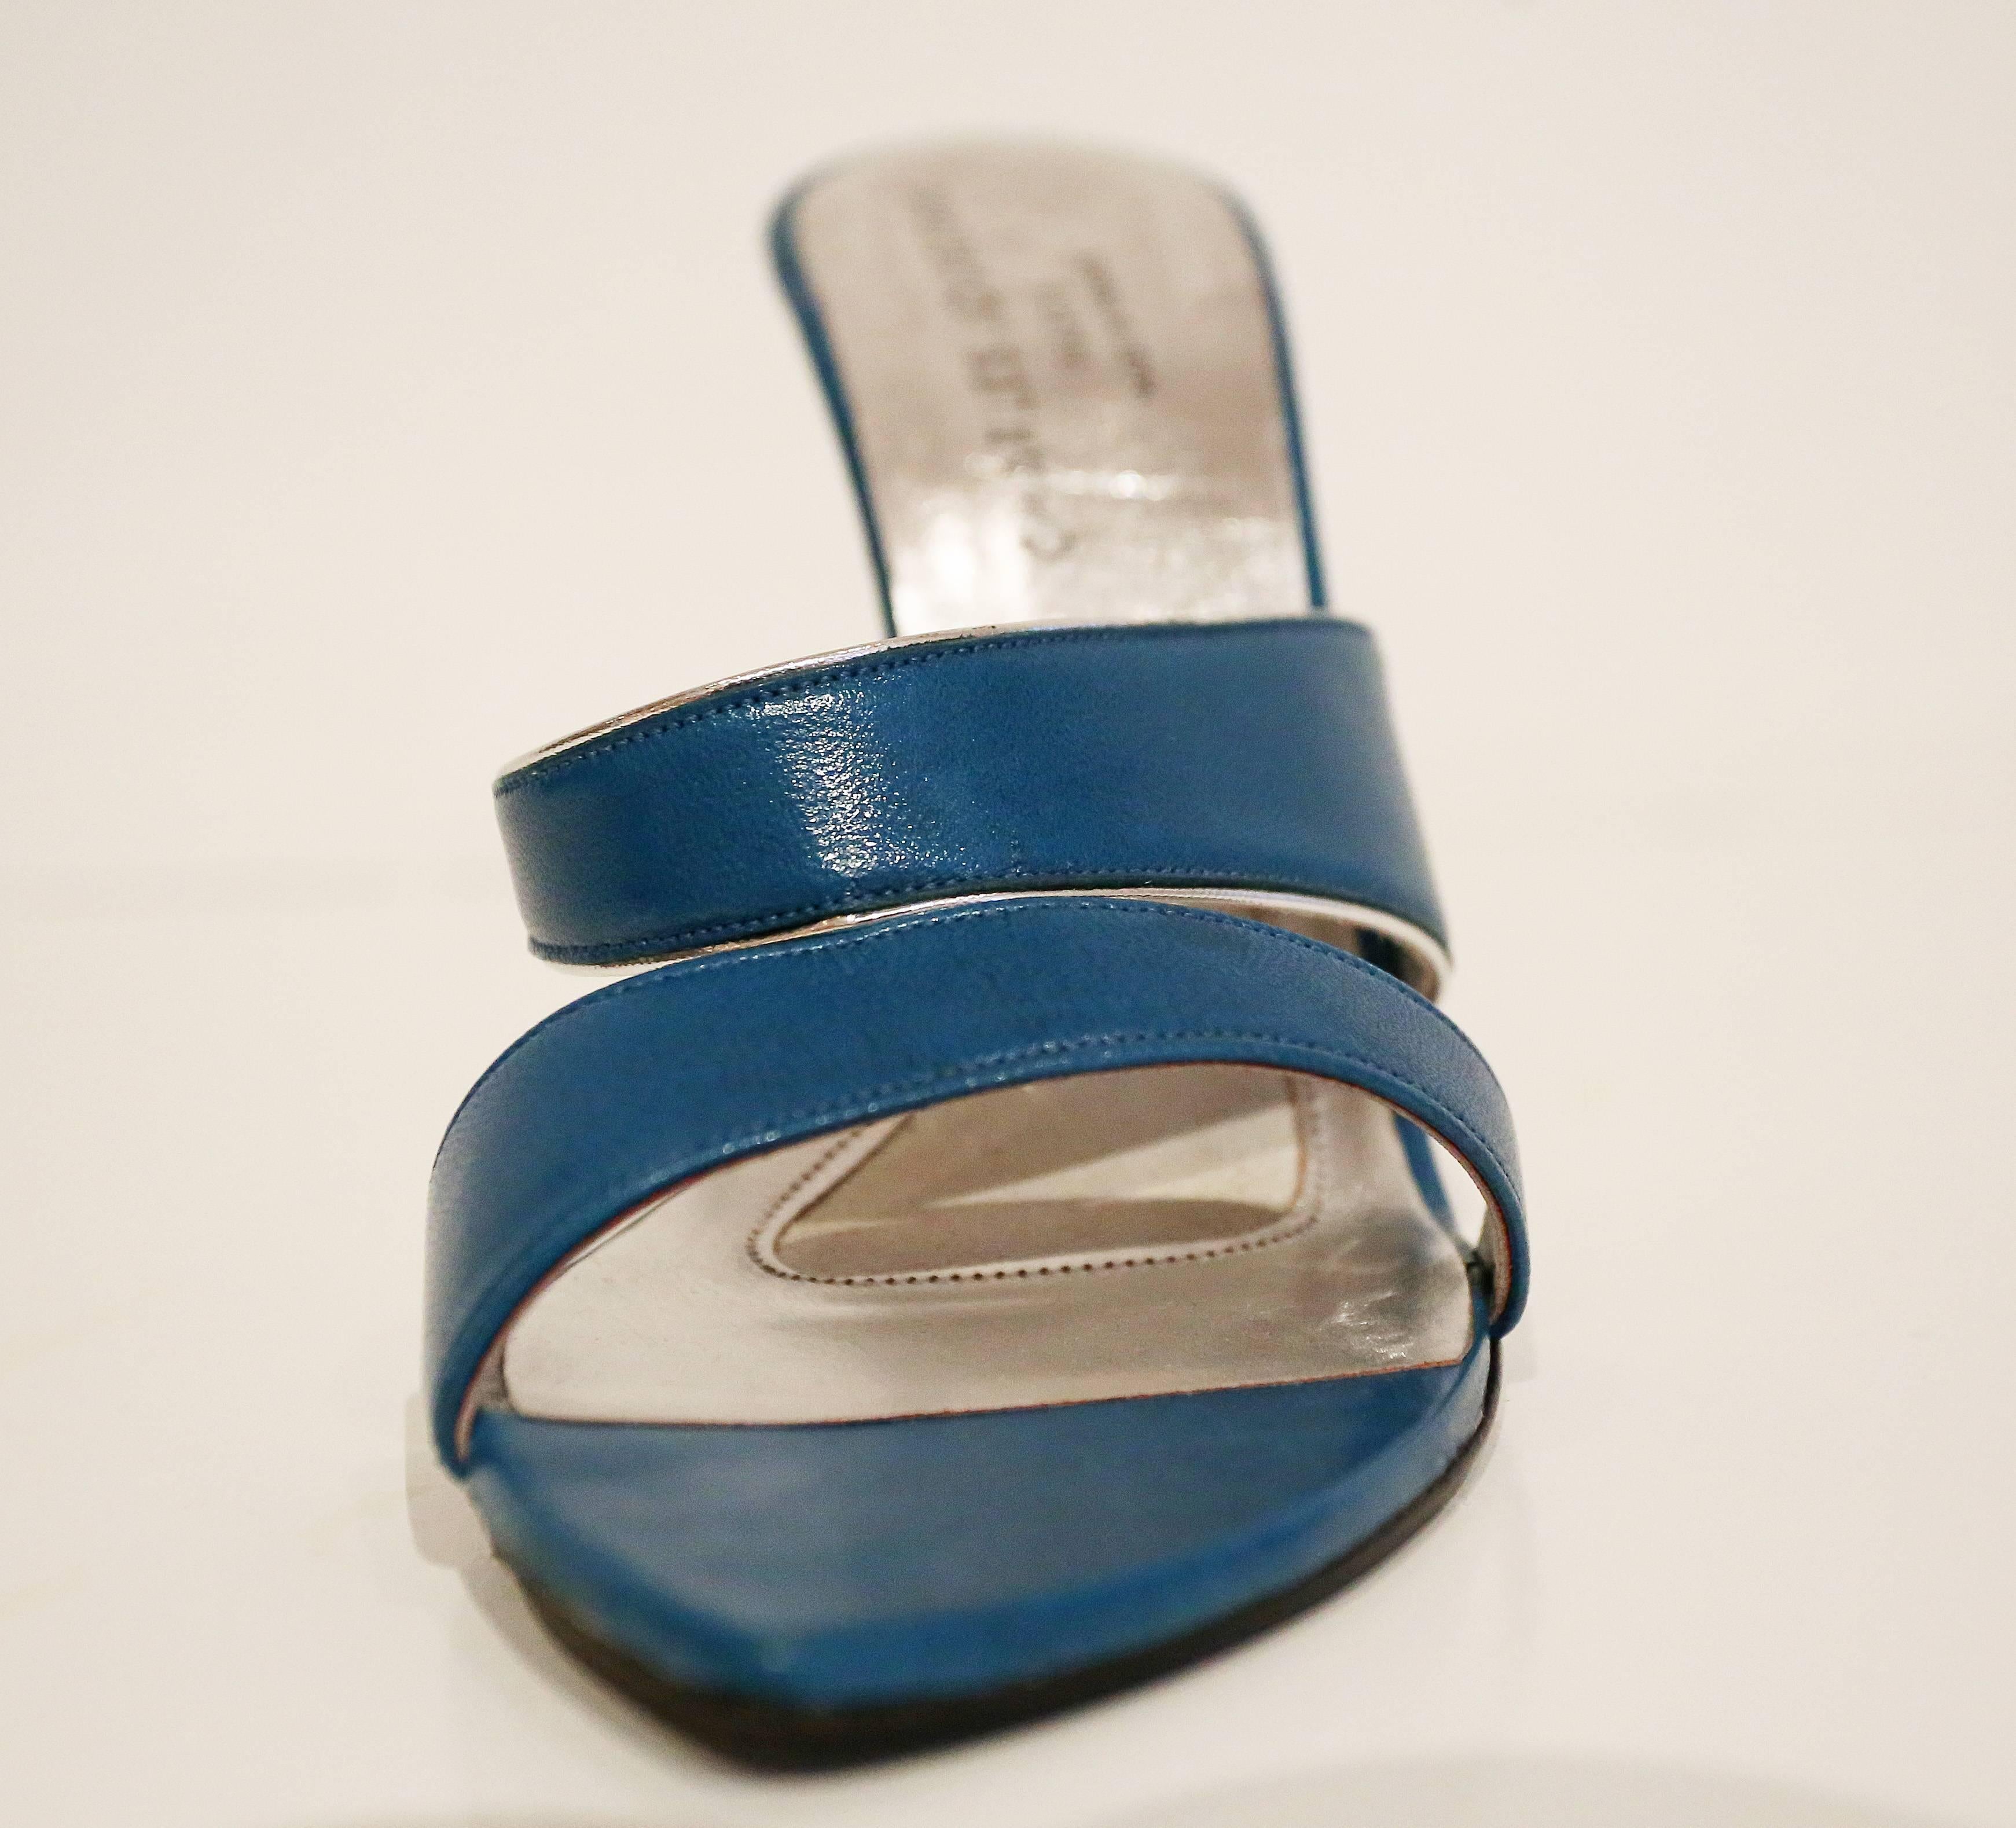 Blue Charles Jourdan futuristic wedge sandals, c. 1969–70 